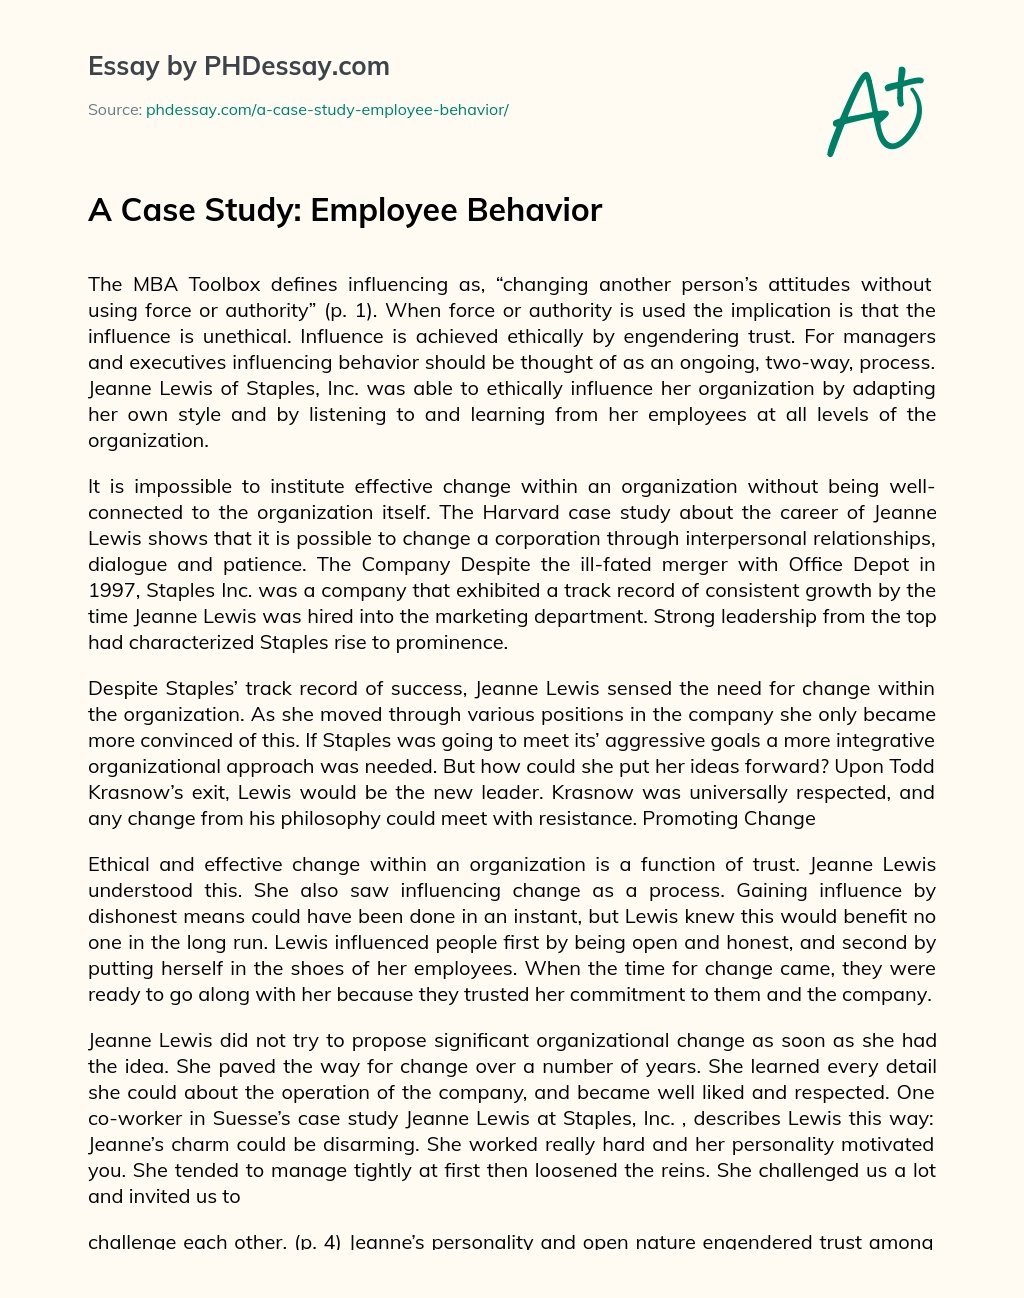 A Case Study: Employee Behavior essay